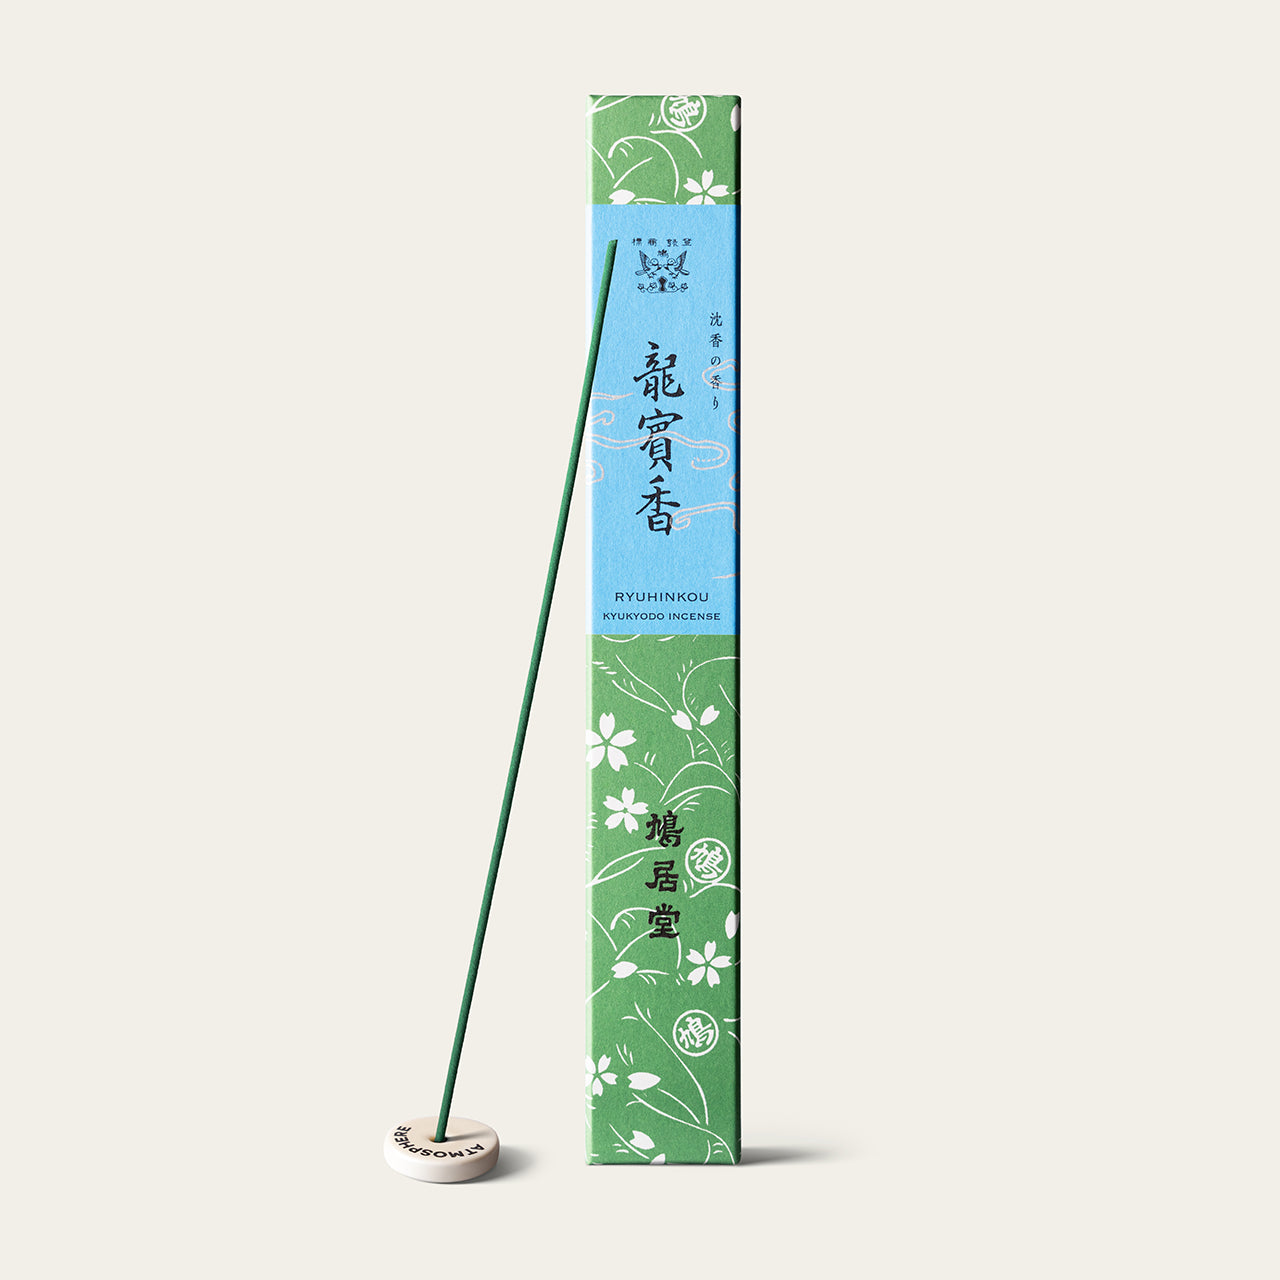 Kyukyodo Ryuhinkou 17cm Japanese incense sticks (60 sticks) with Atmosphere ceramic incense holder